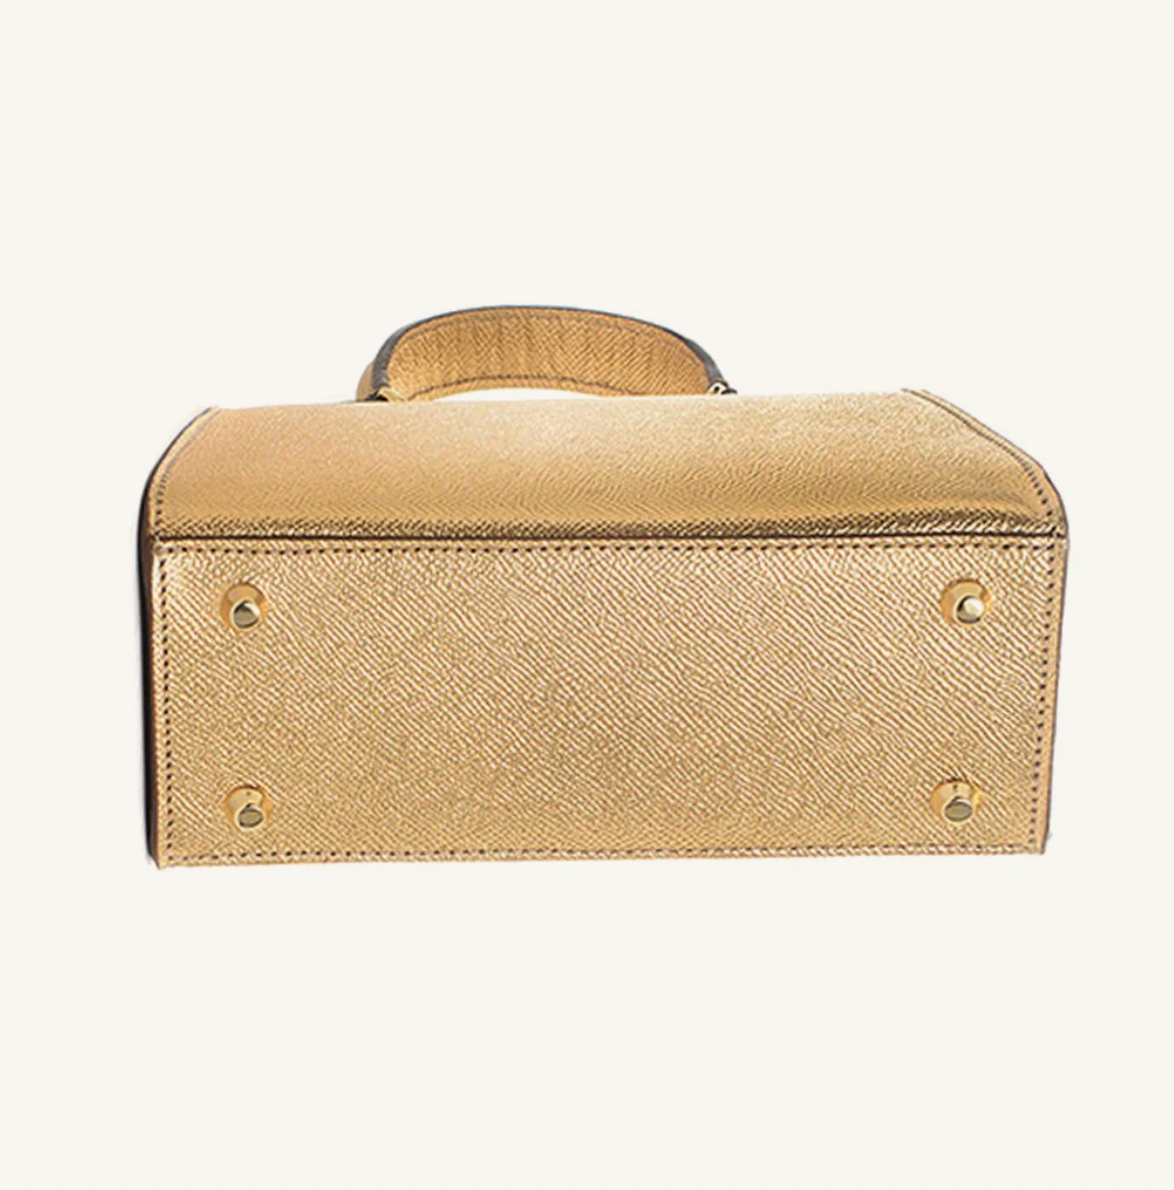 Carbotti handbags - Fine Italian leather goods